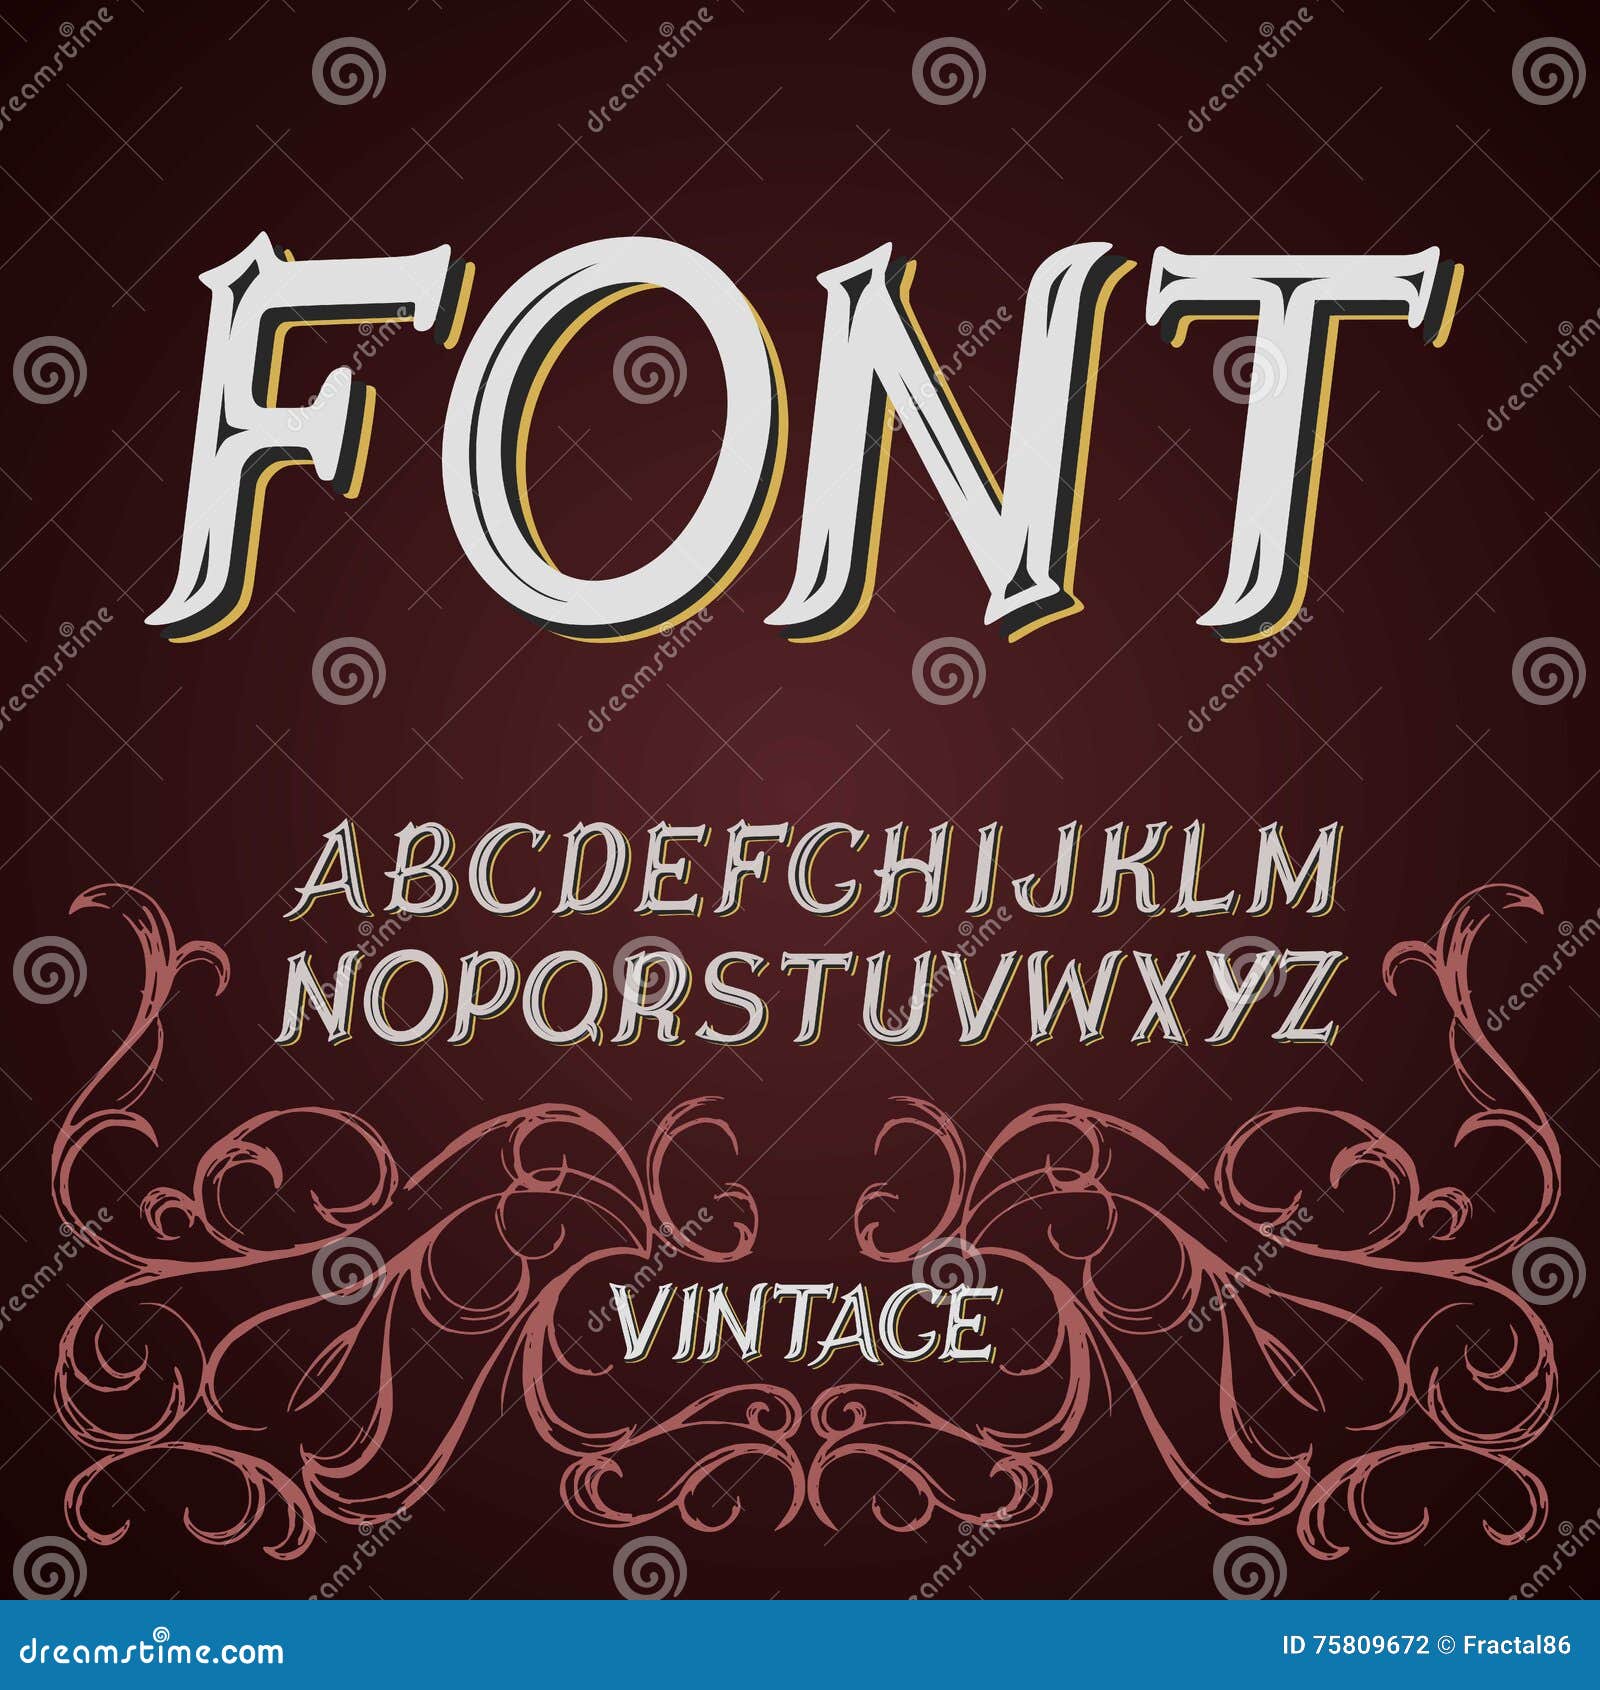 Vector Vintage Label Font on a Dark Background Stock Vector ...